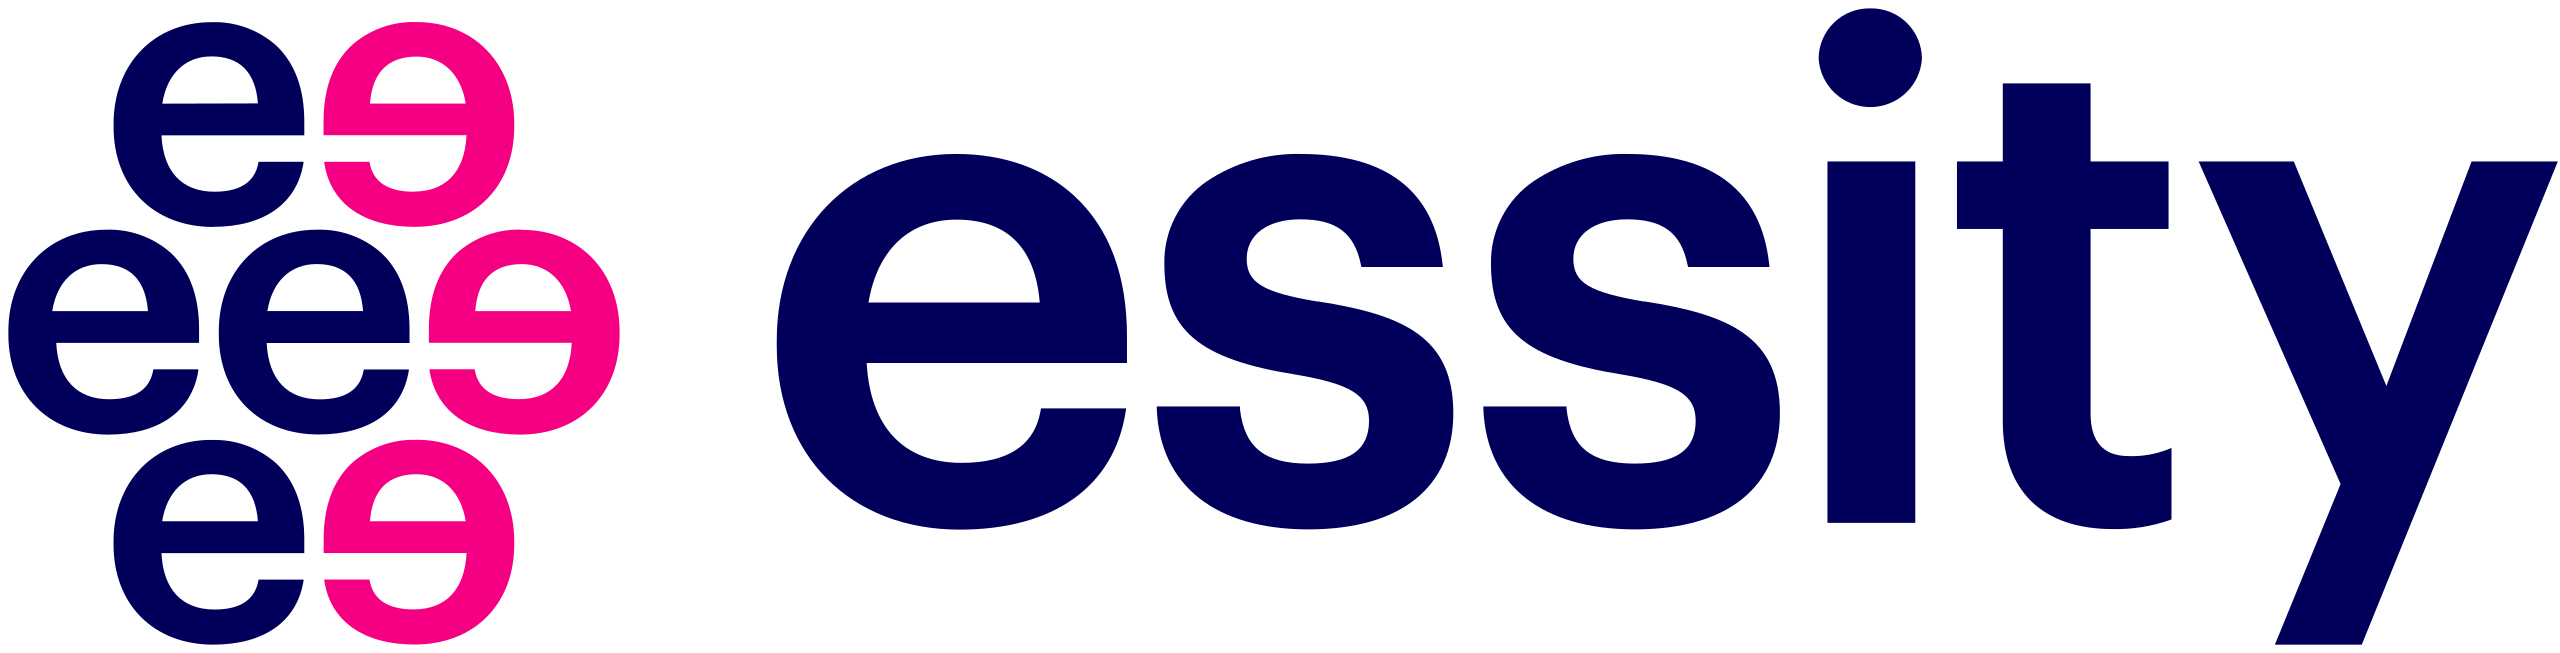 2560px-Essity_logo.svg